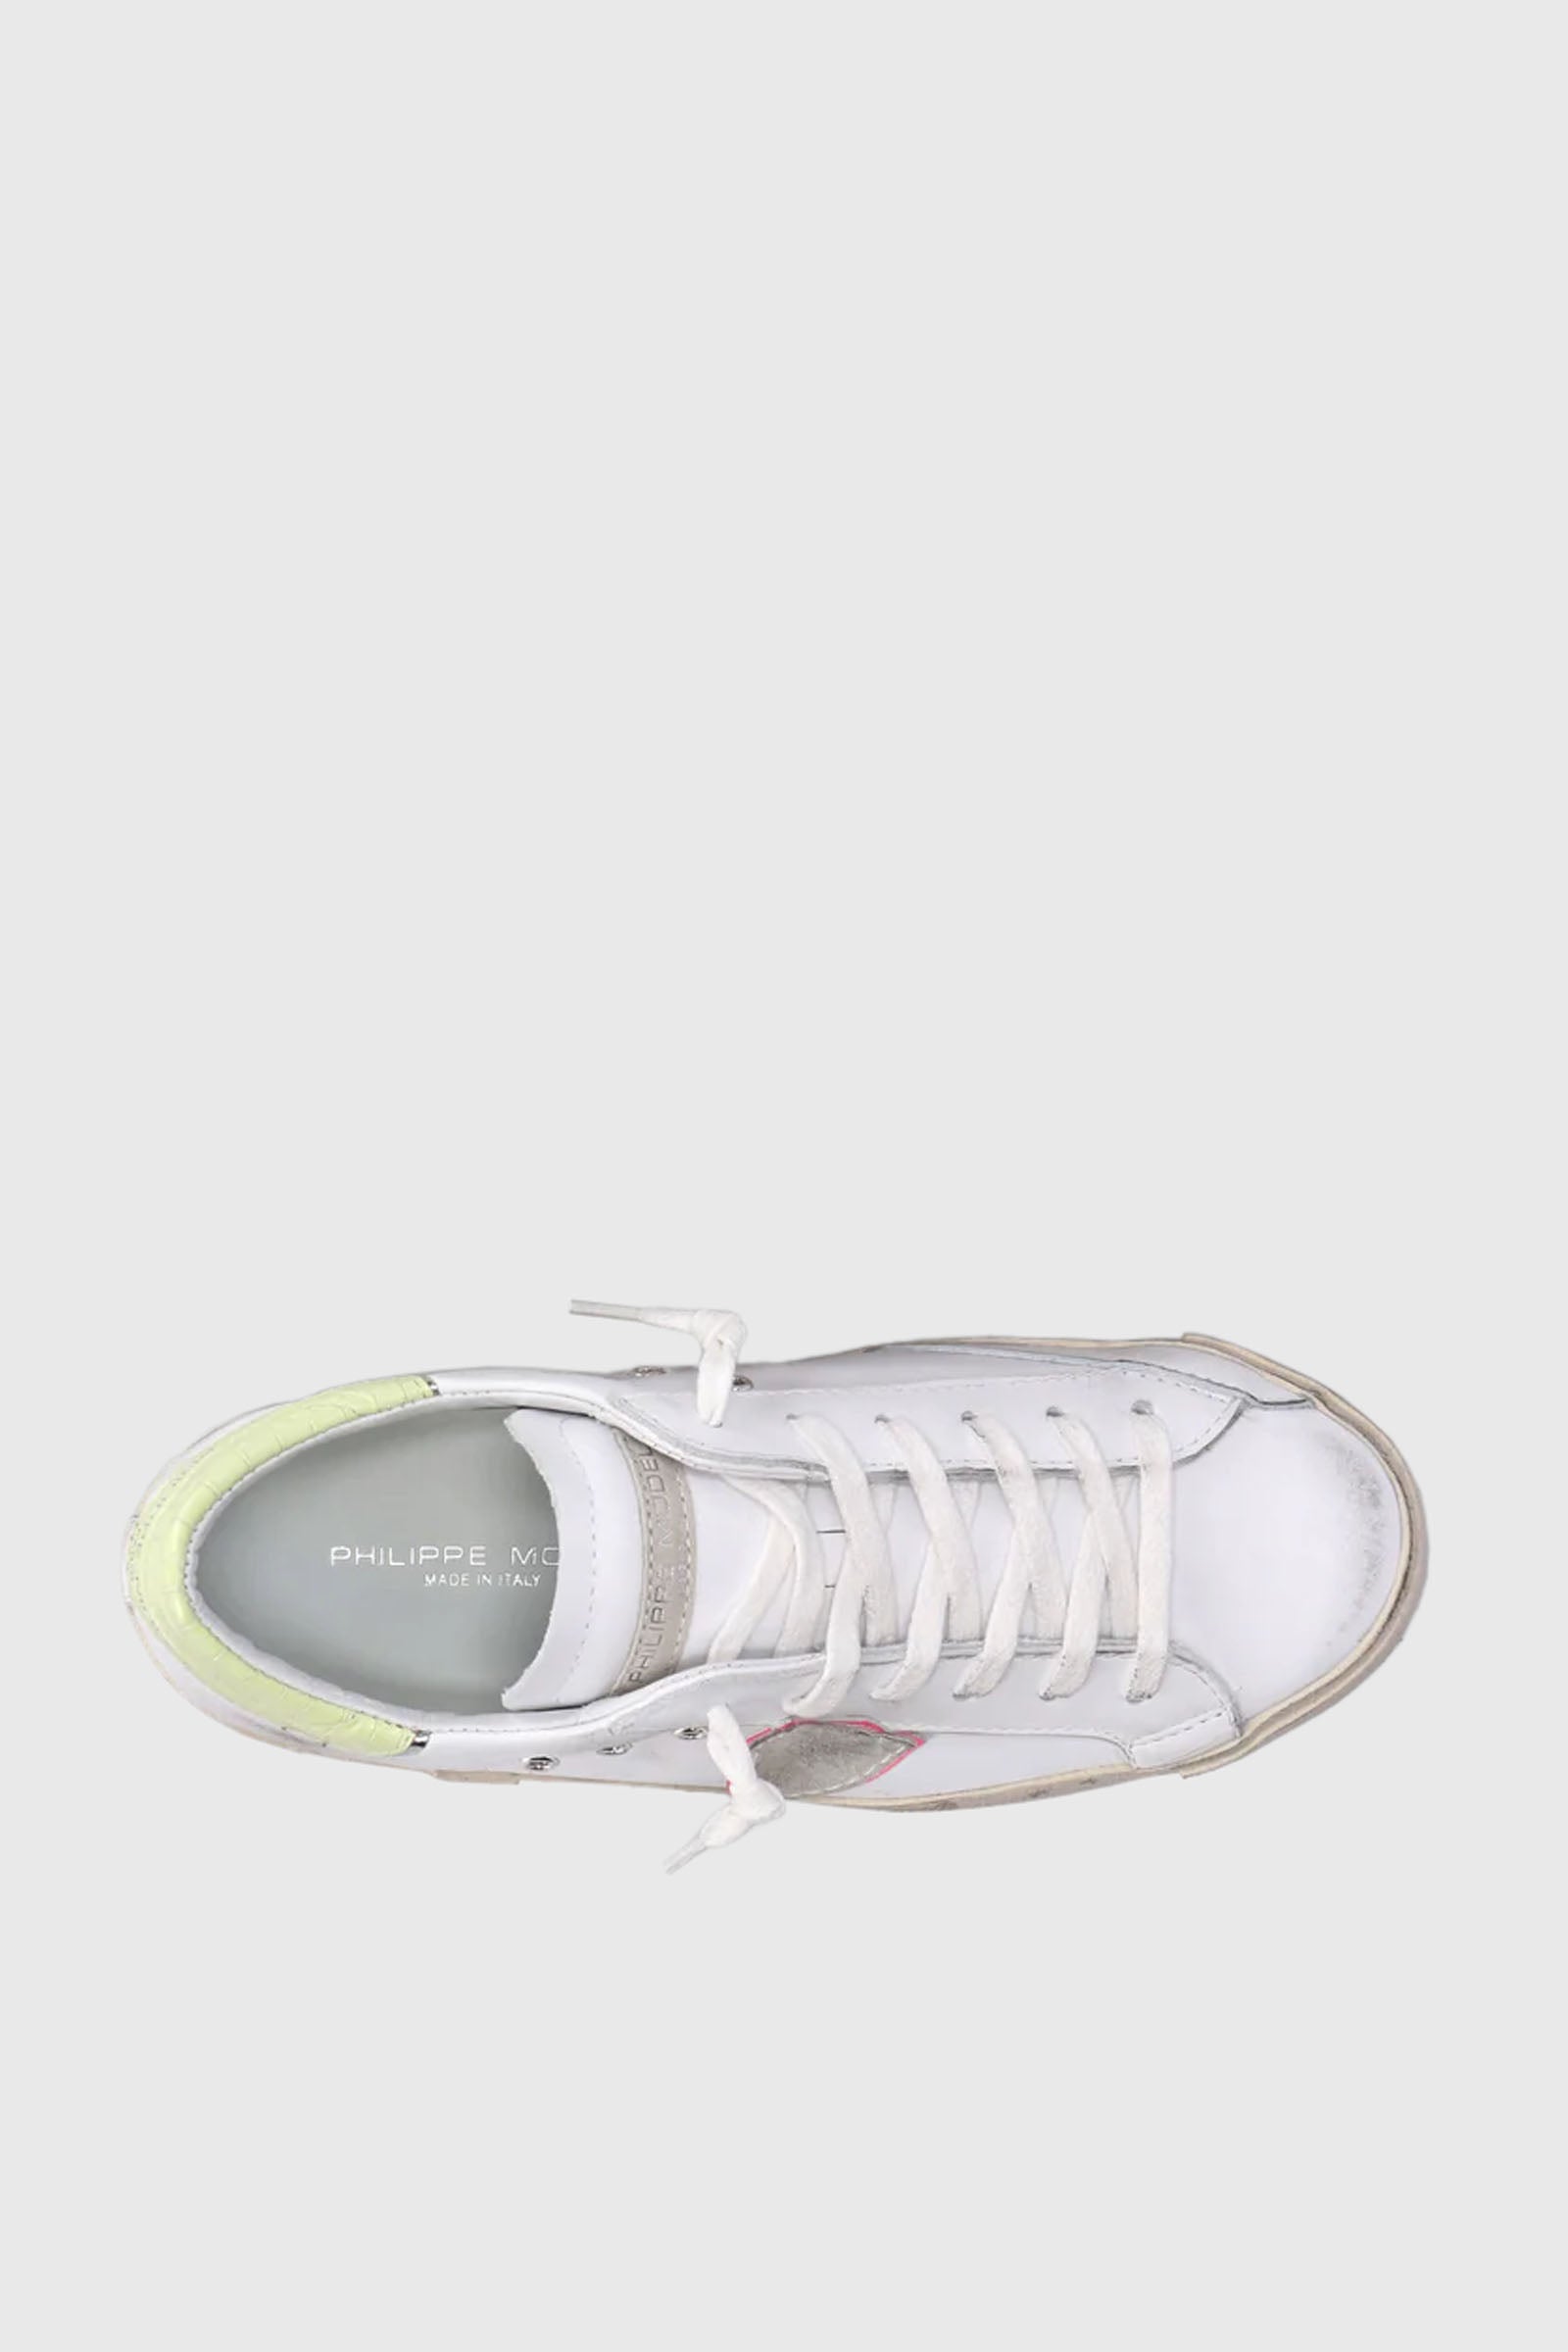 Philippe Model Sneaker PRSX Pelle Bianco/Giallo Fluo - 5